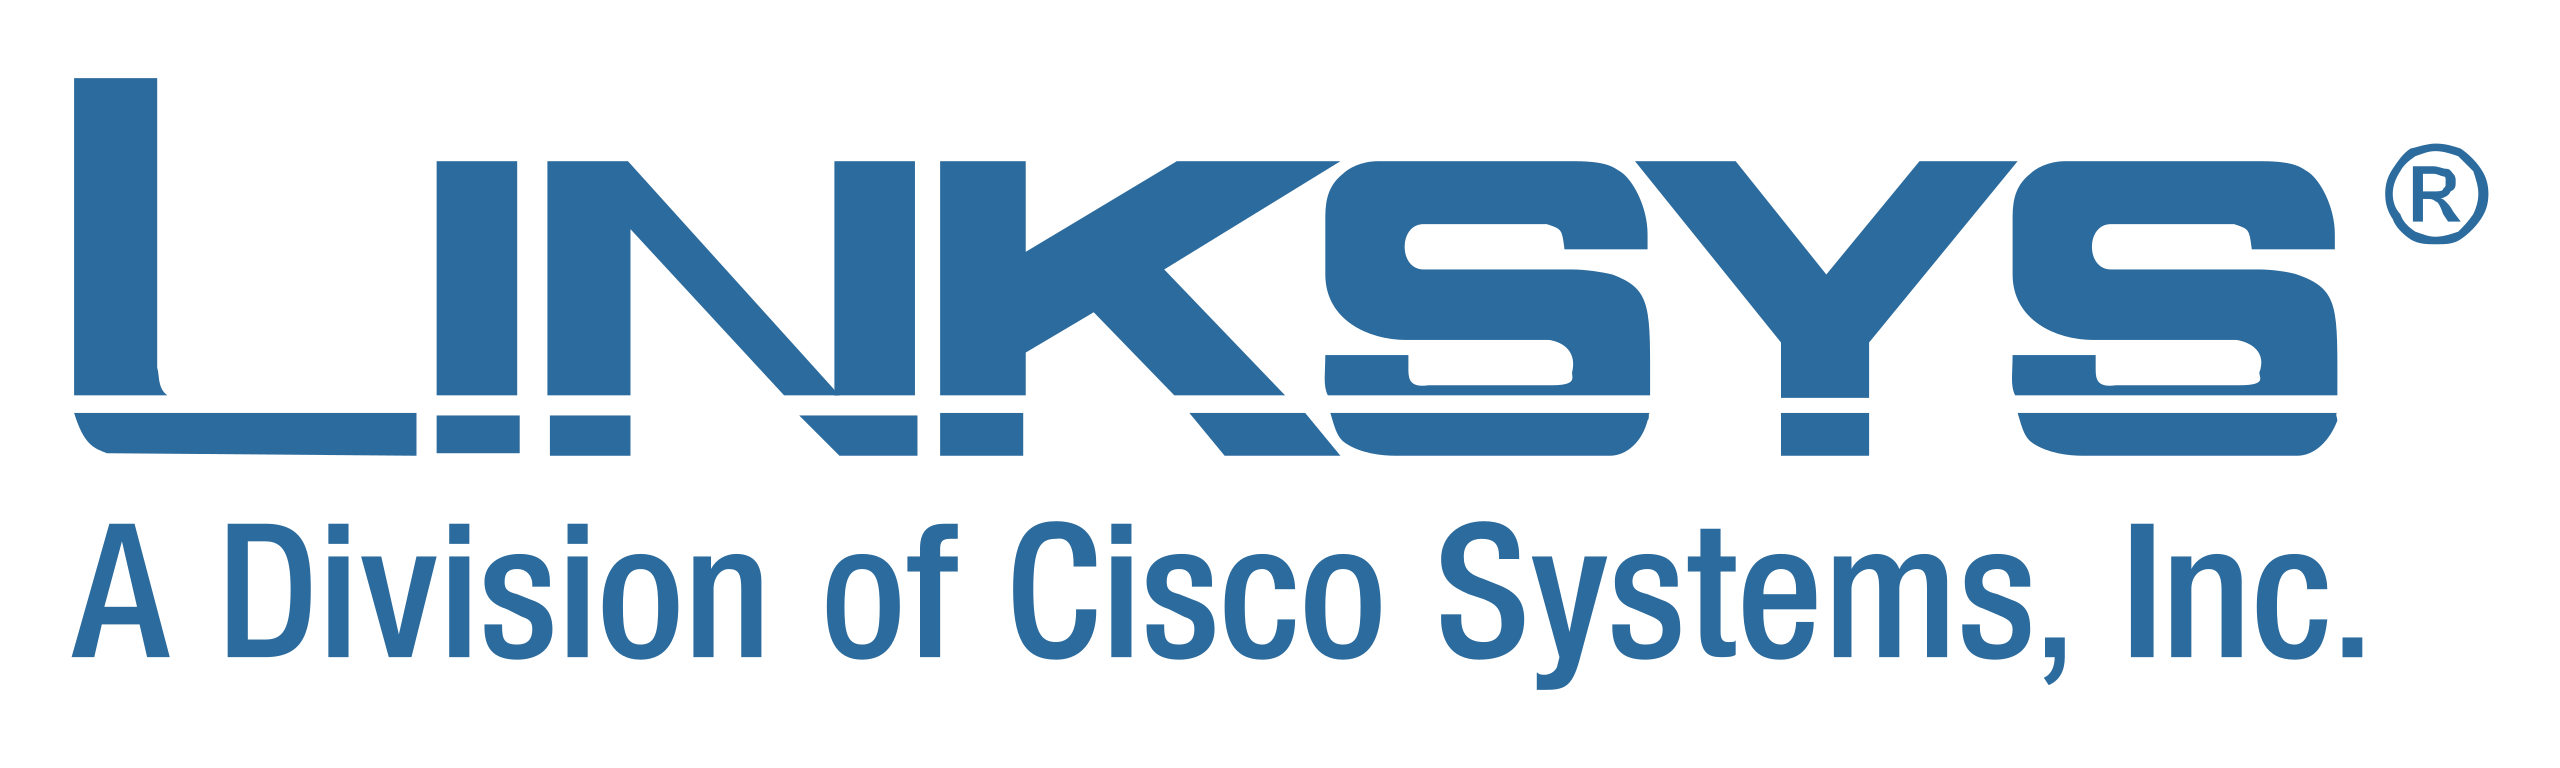 Linksys Cisco